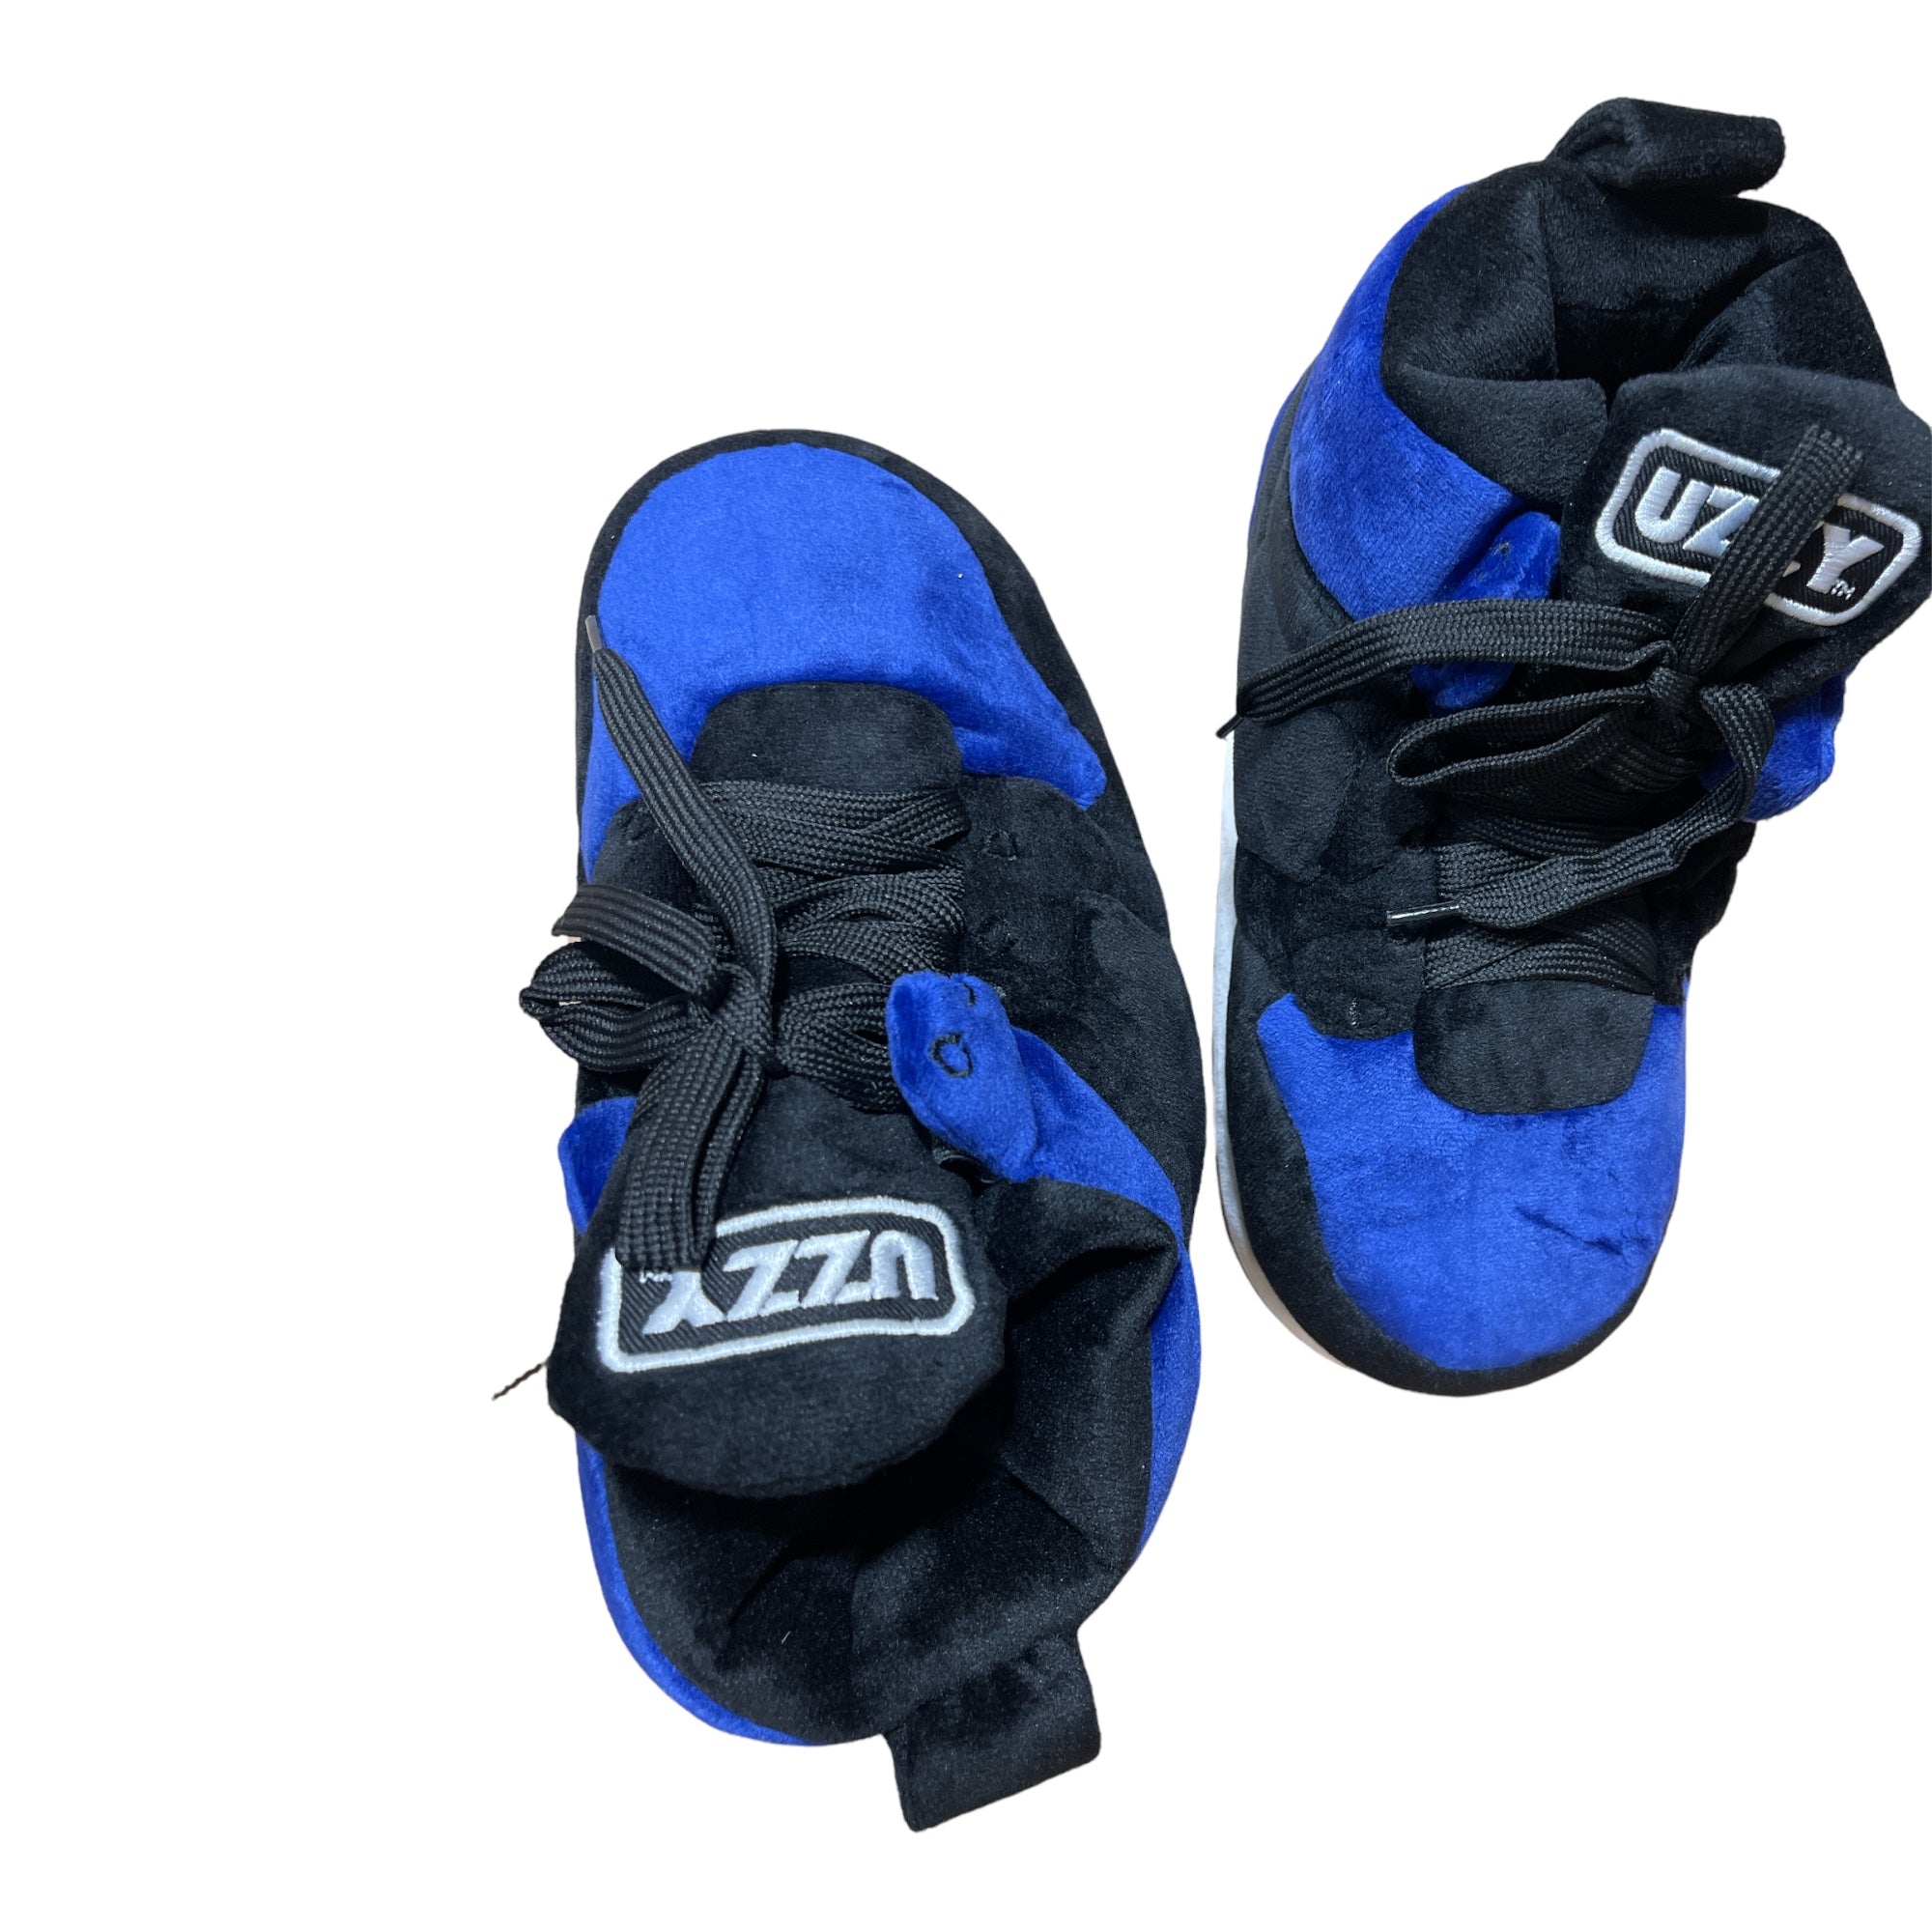 Uzzy Unisex Air Yeezy 2 Sneaker Slippers